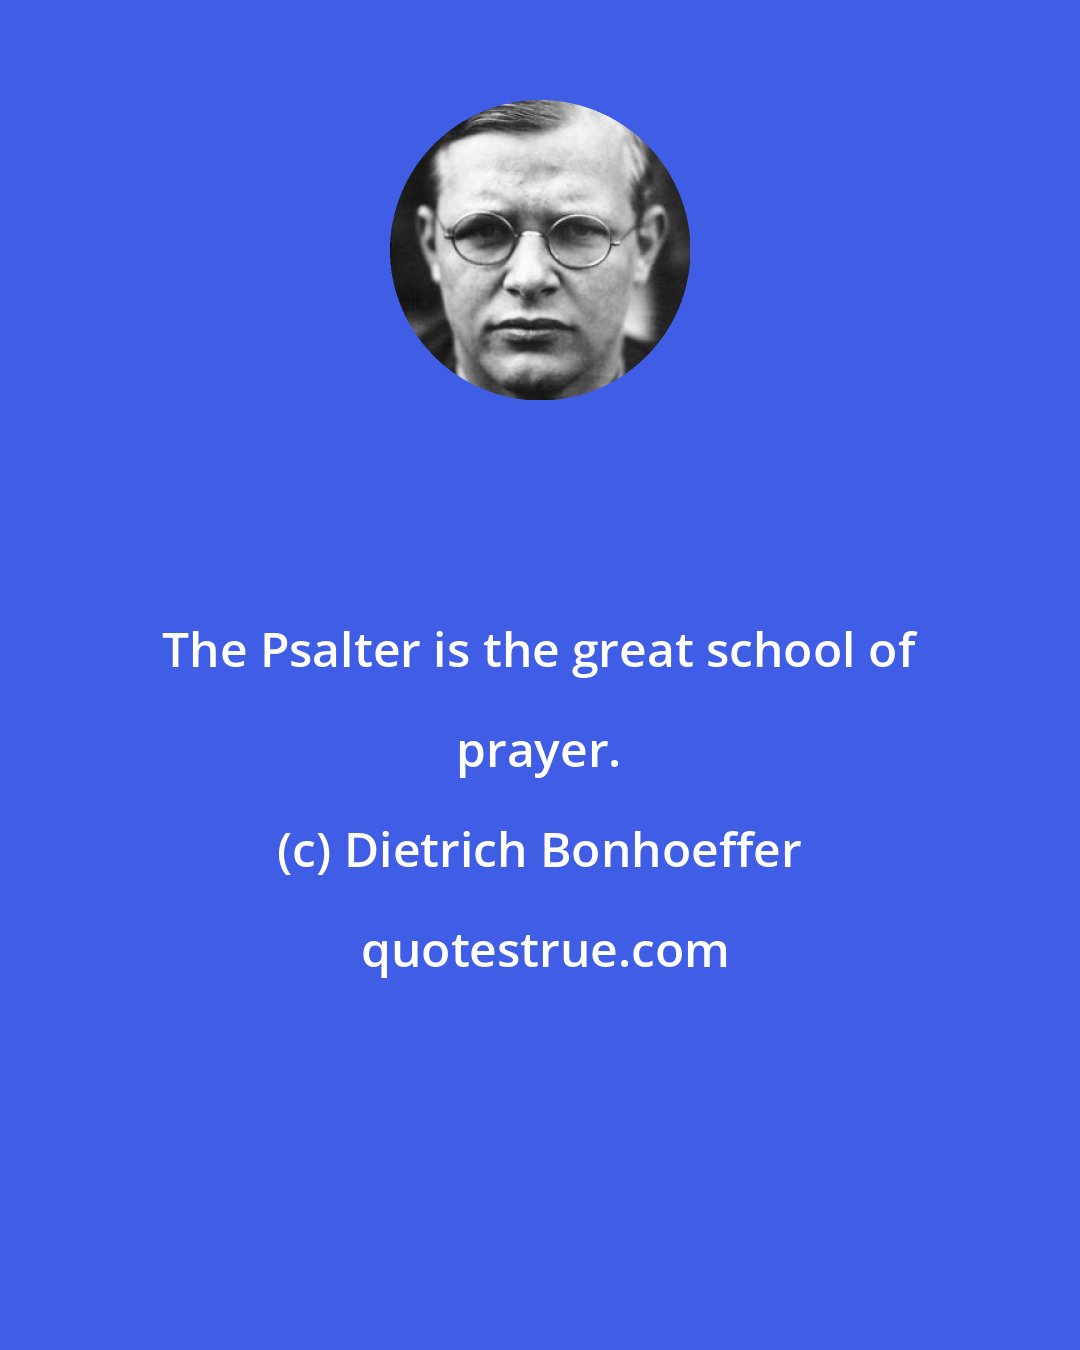 Dietrich Bonhoeffer: The Psalter is the great school of prayer.